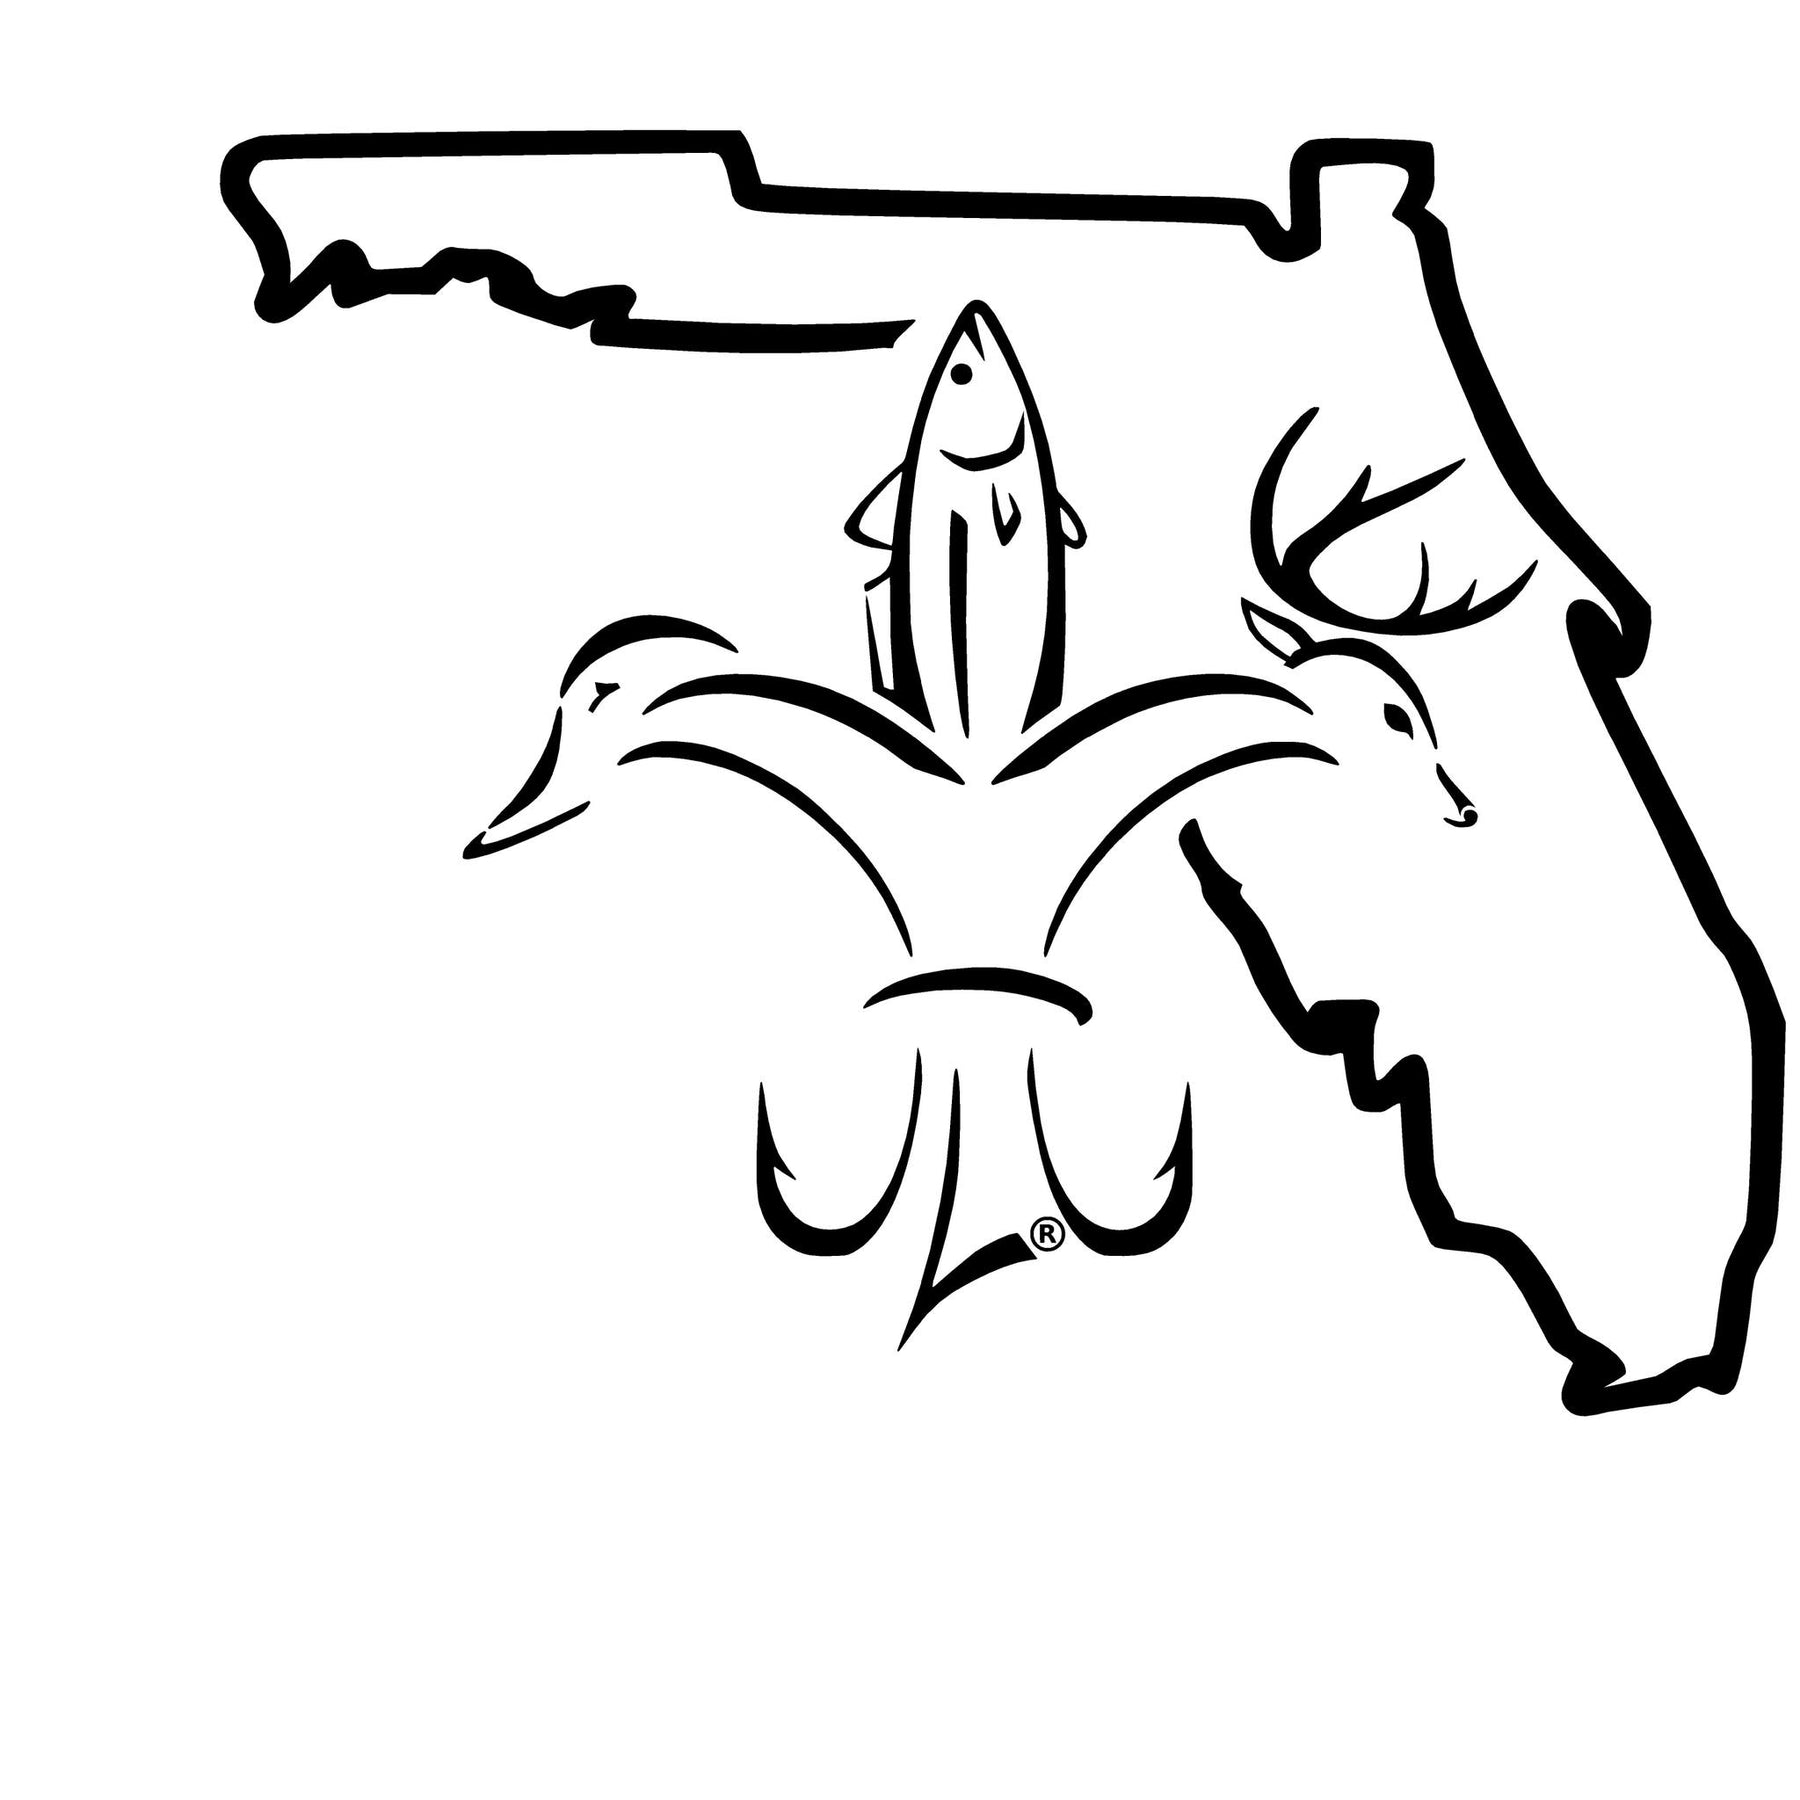 Florida Sportsman State Decal - Deer, duck, fish, hook fleur-de-lis logo